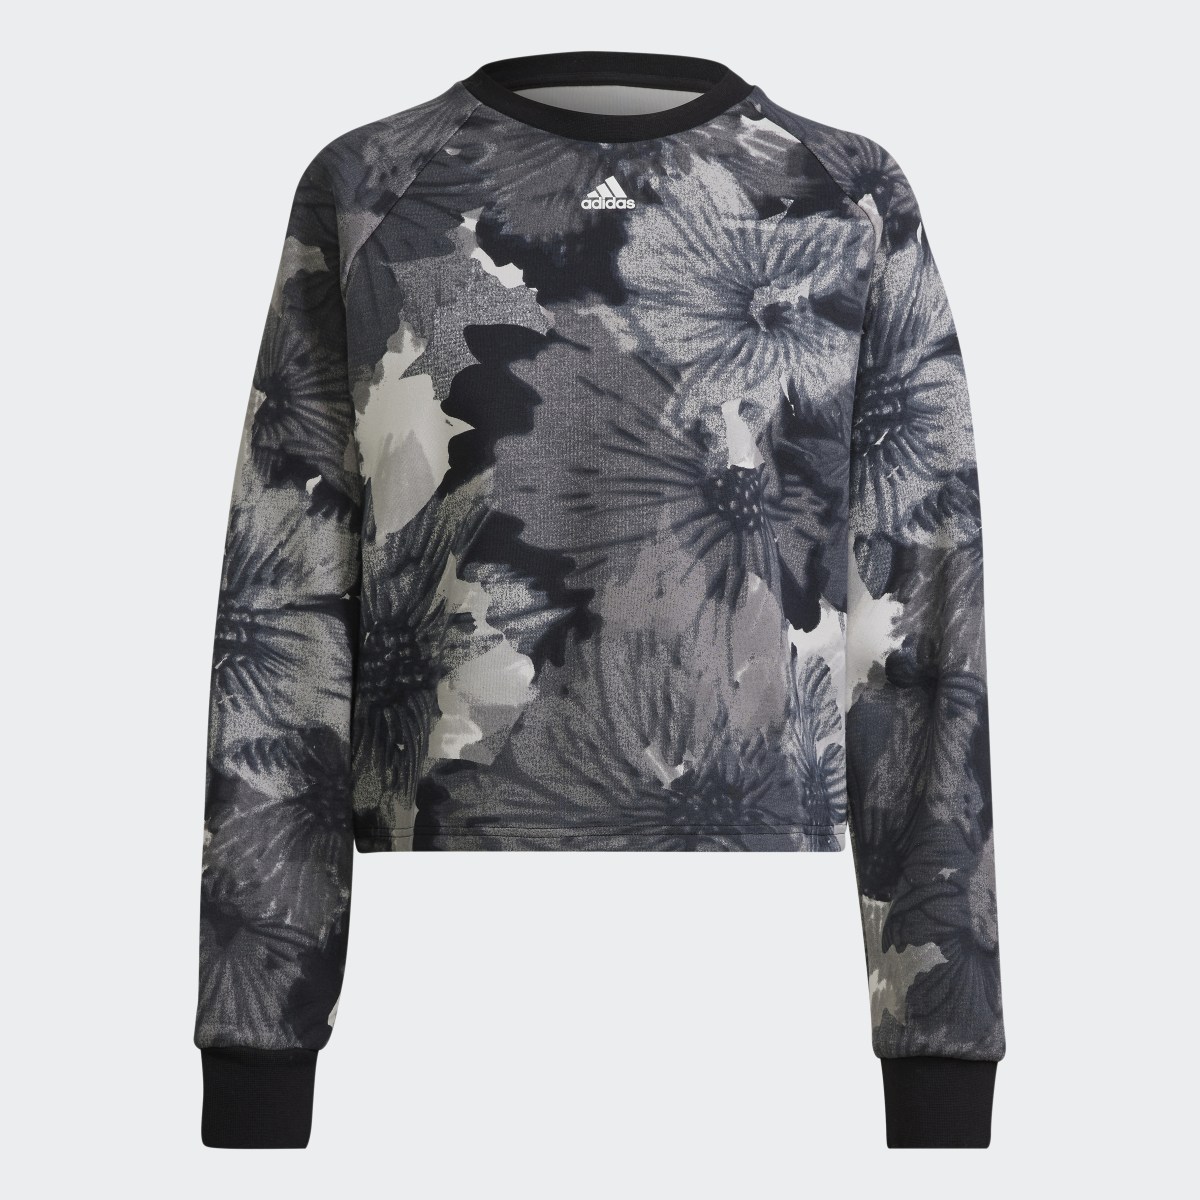 Adidas Allover Print Sweatshirt. 5